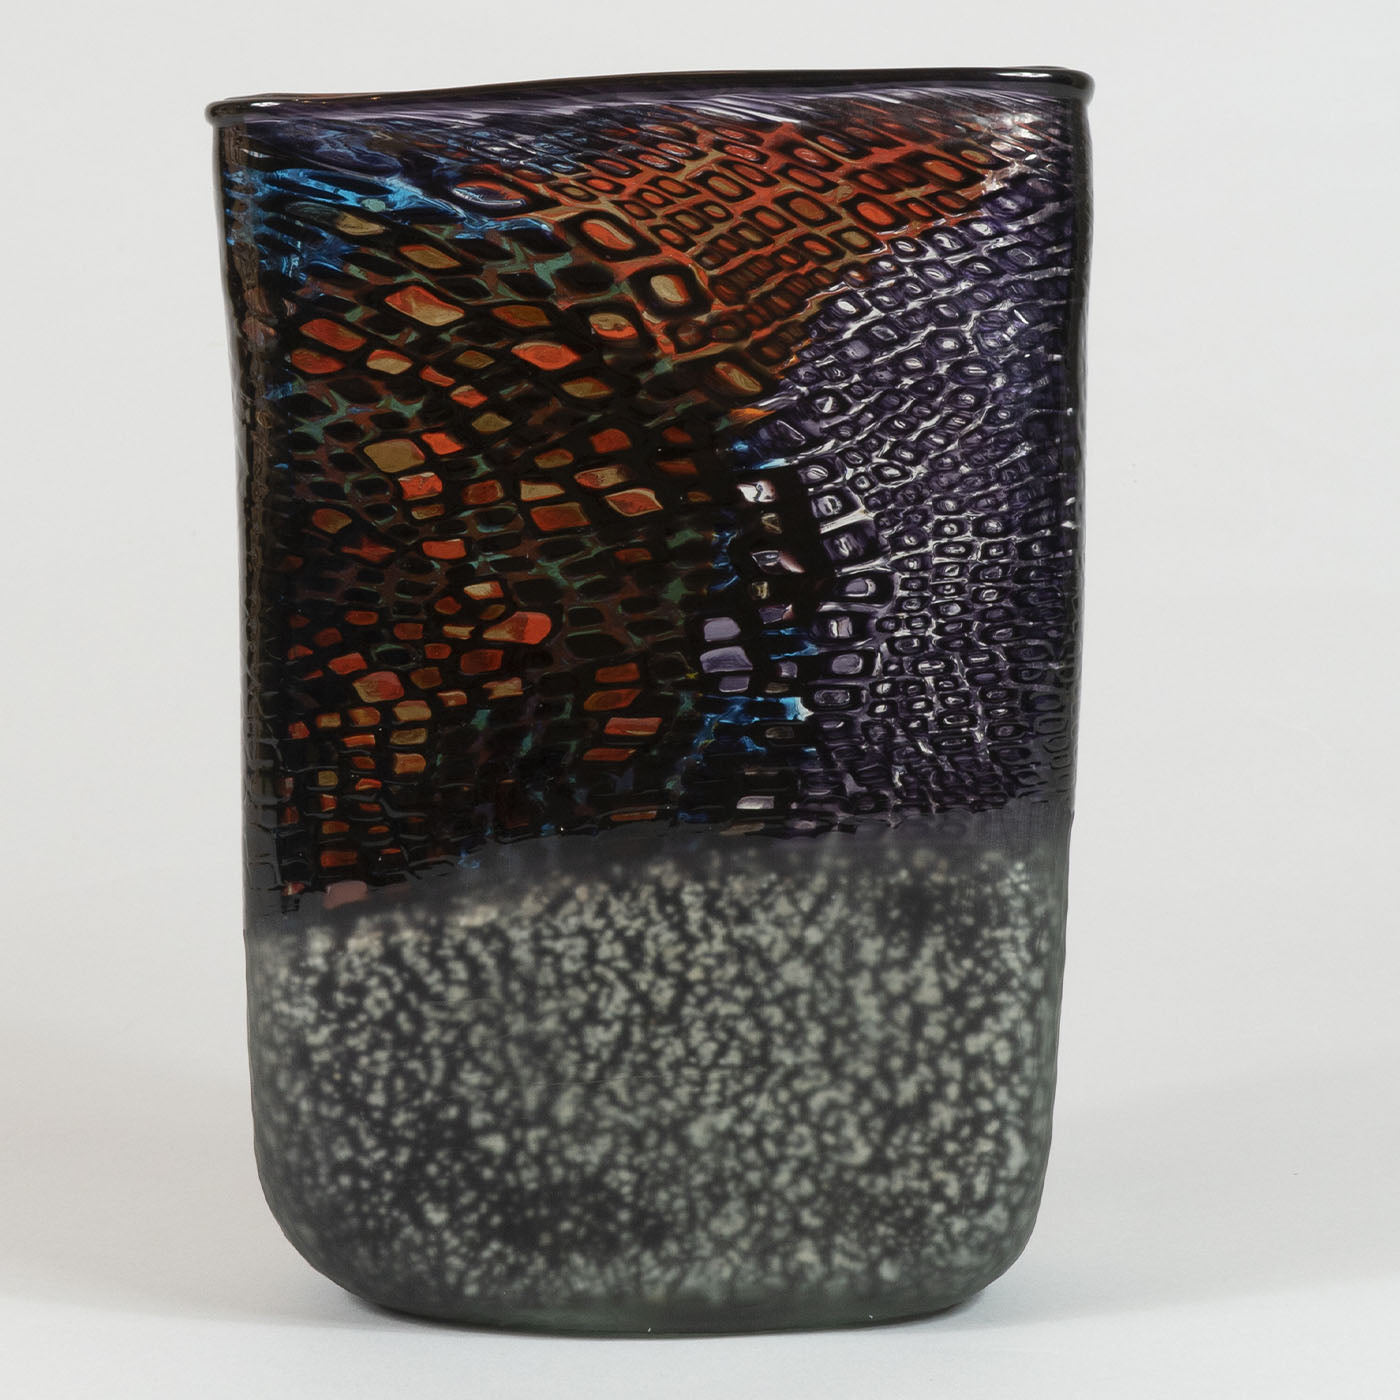 Windows Cubism Collection Vase en ambre par Tsuchida Yasuhiko - Vue alternative 3